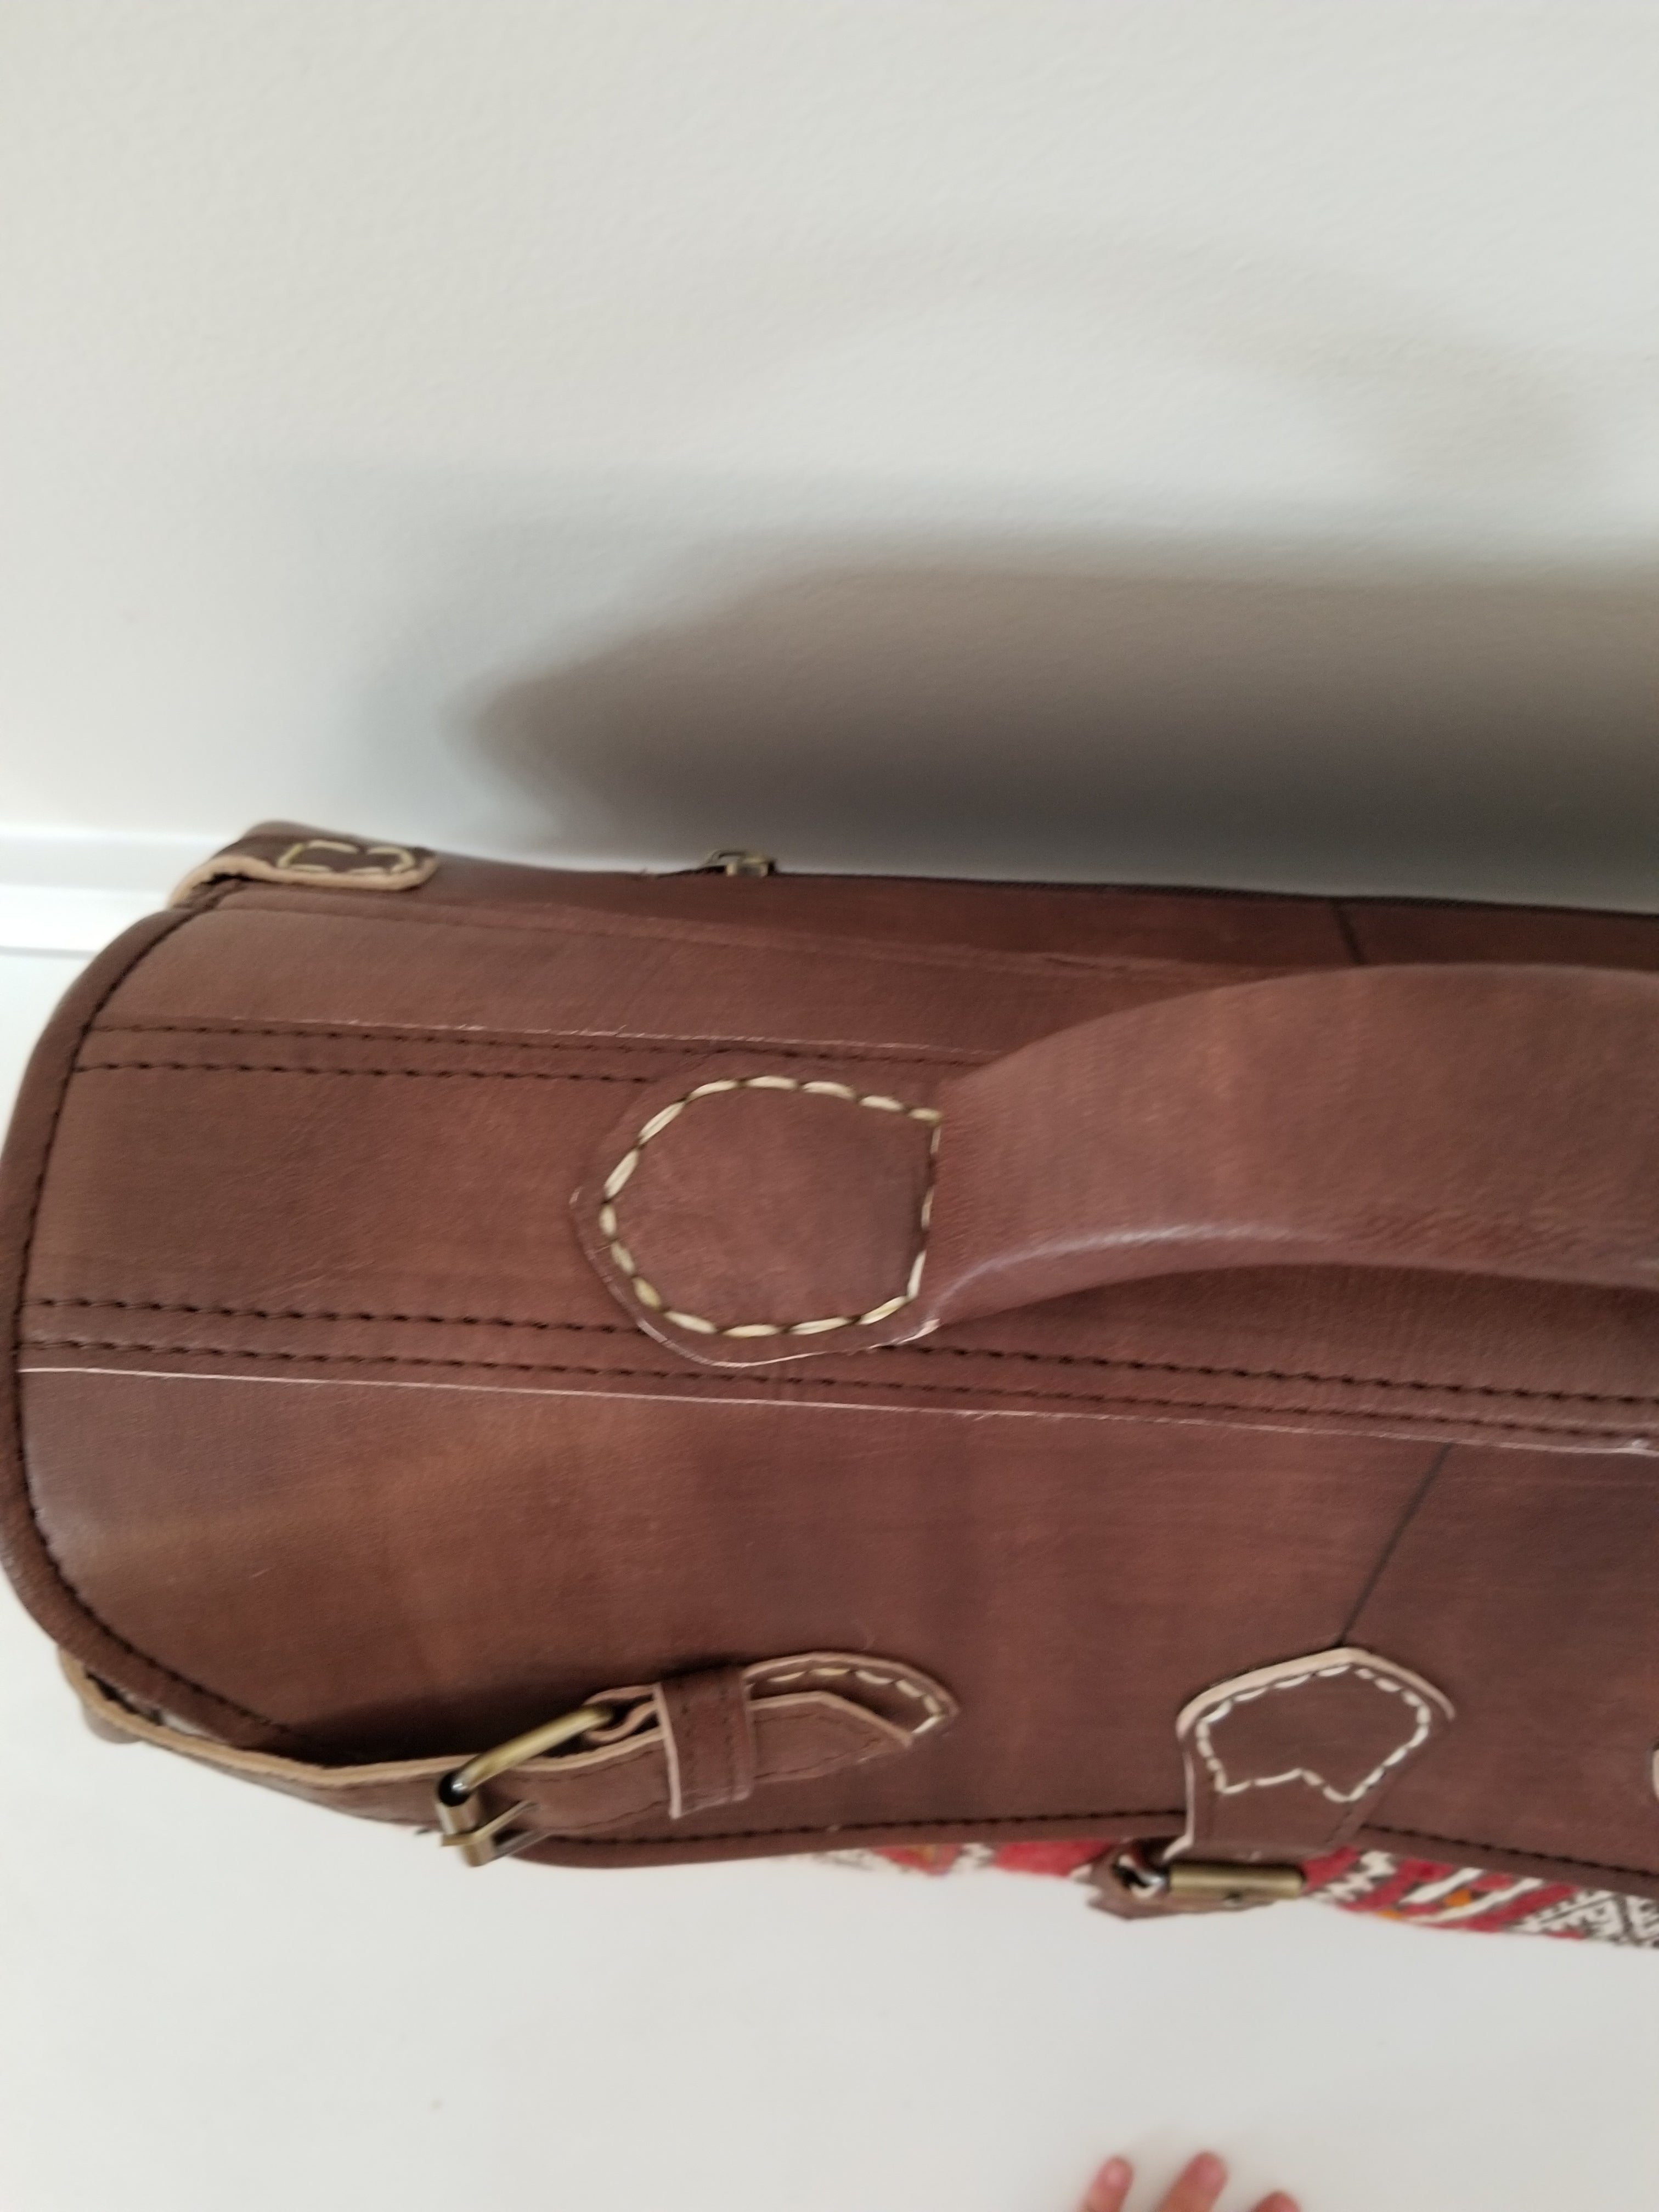 Kilim Leather Bag - Medium